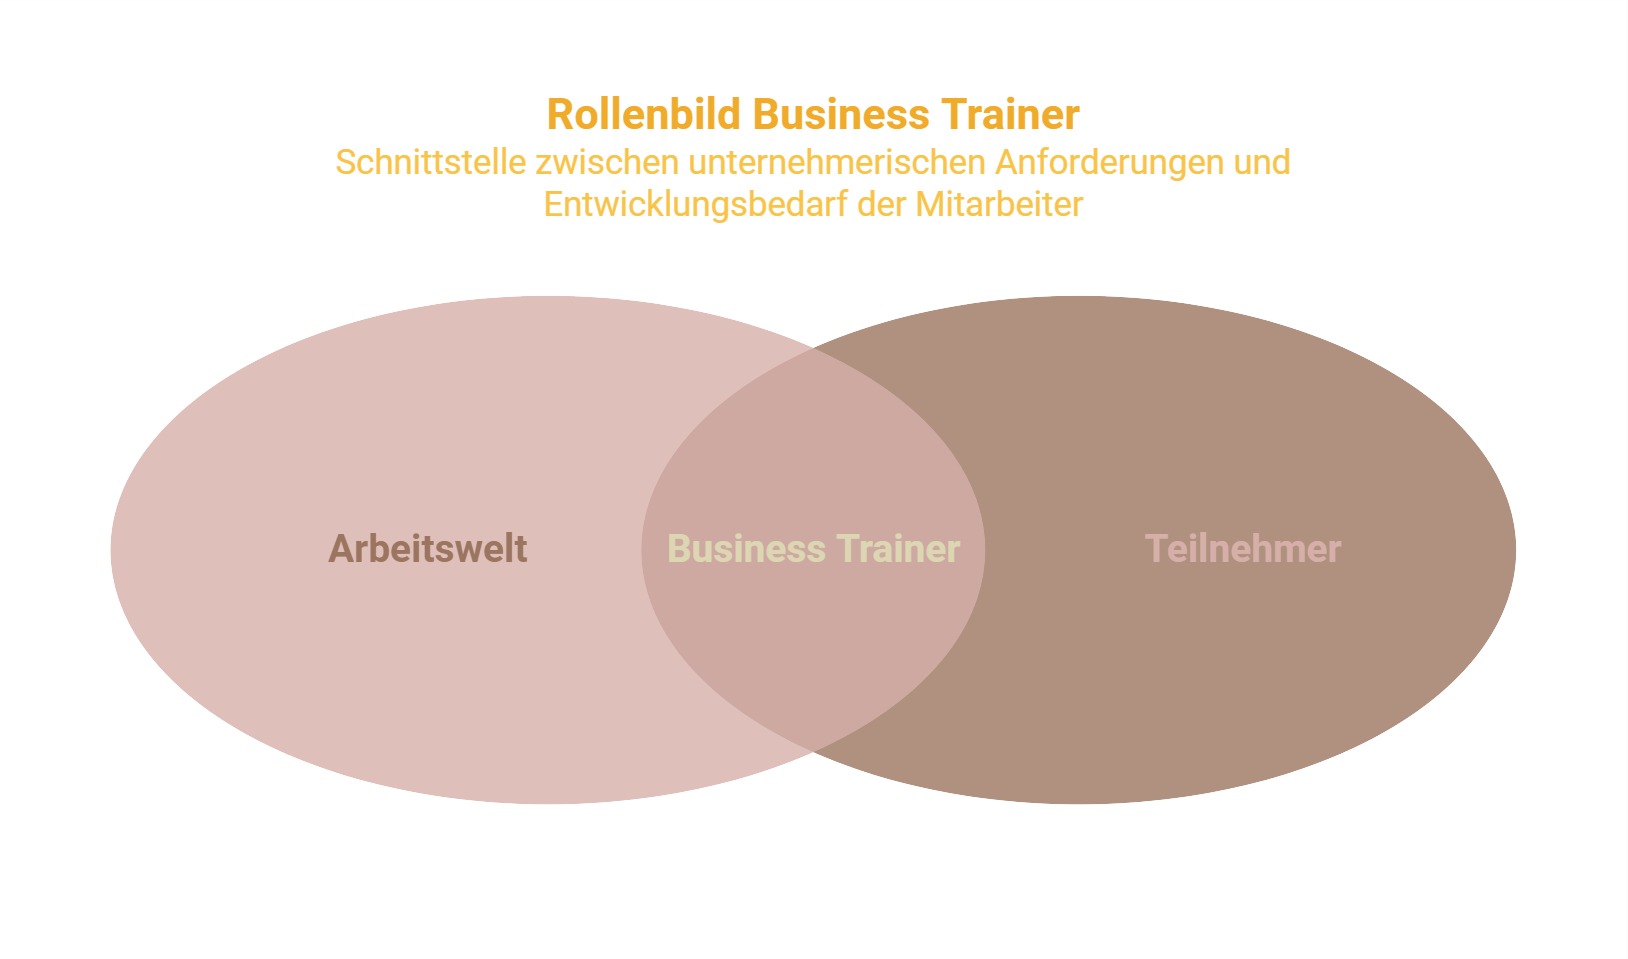 Rollenbild Business Trainer